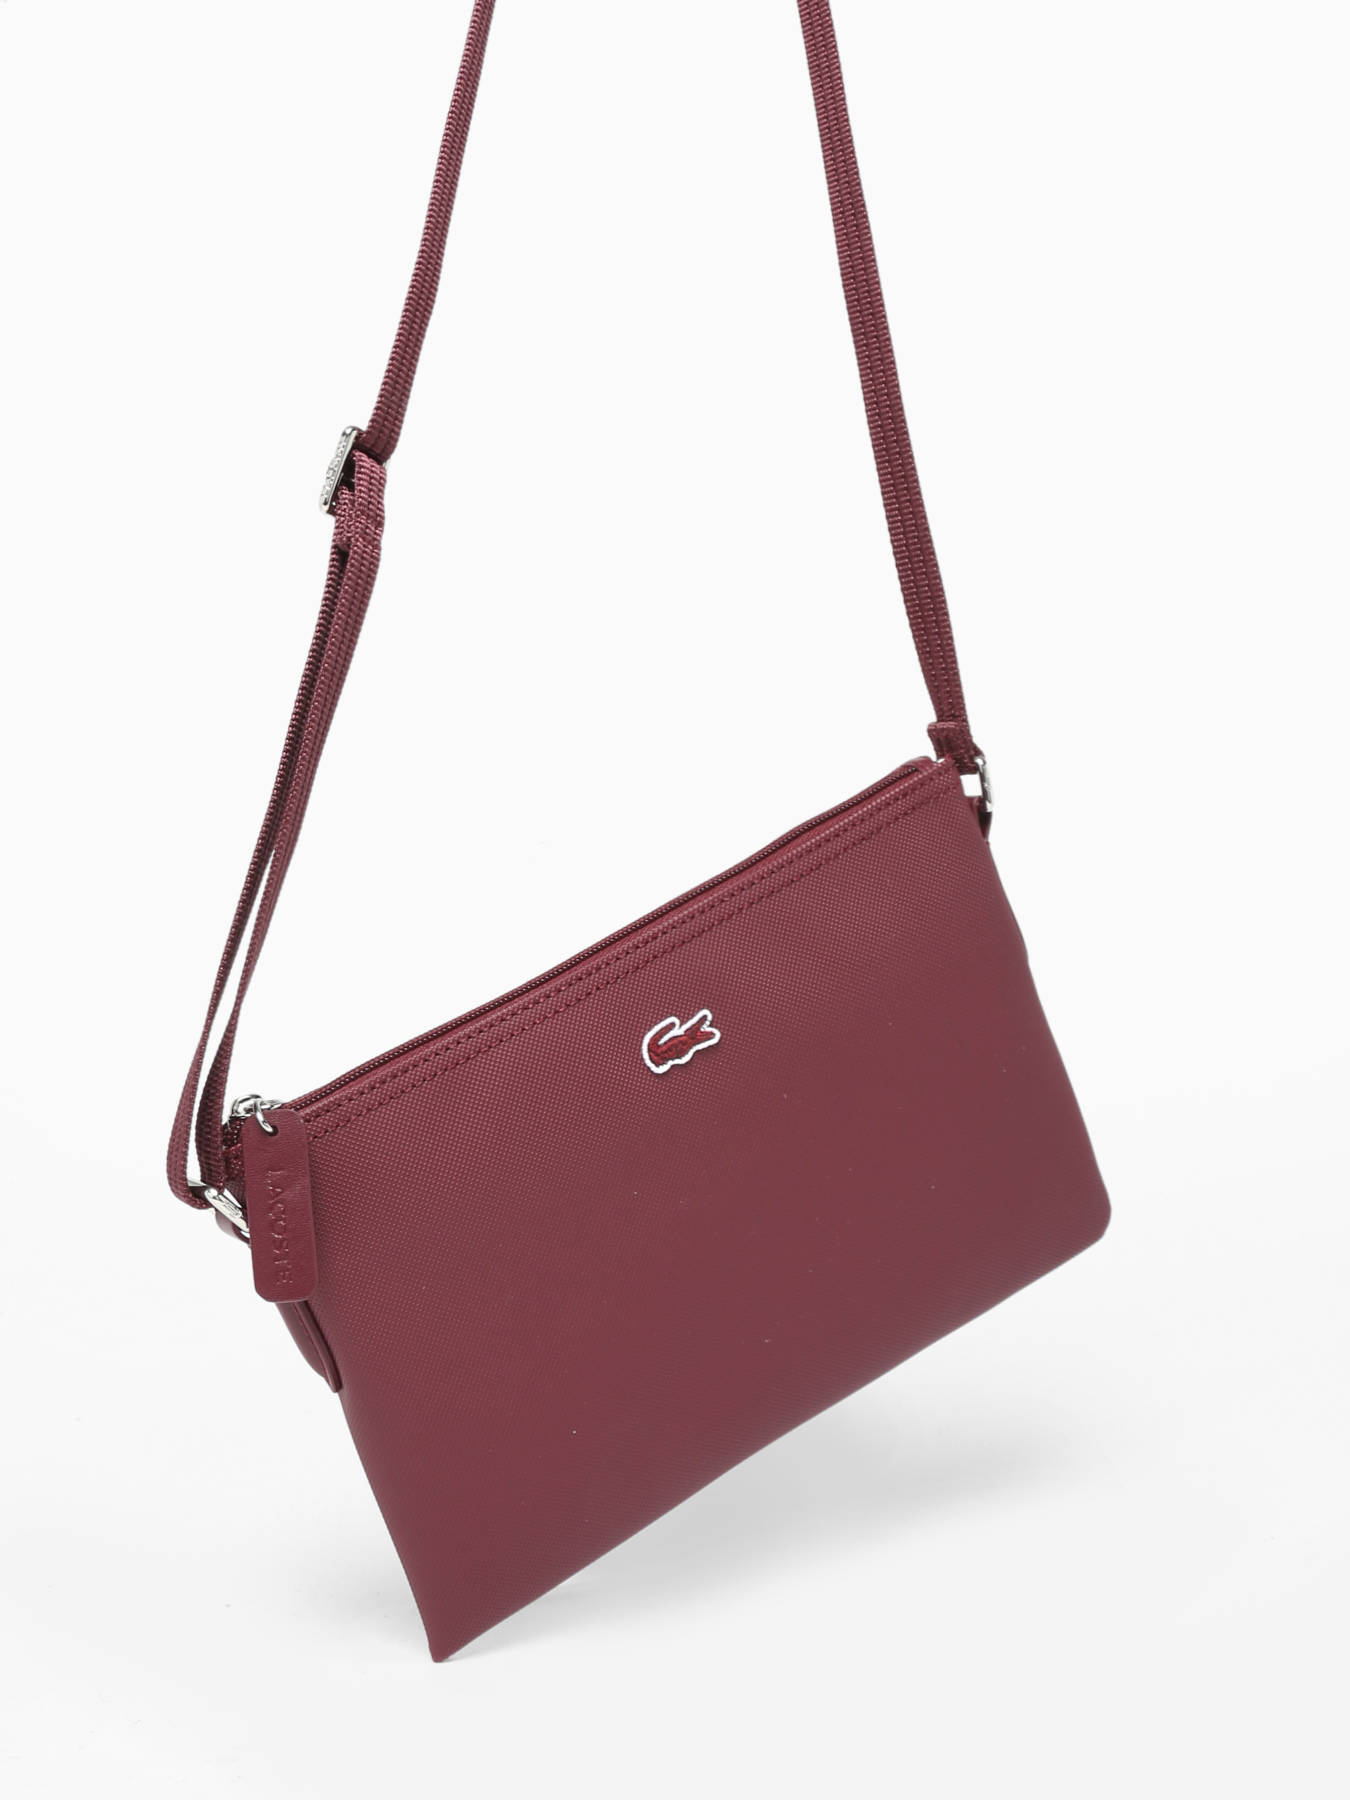 Lacoste Women's L.12.12 Concept Flat Crossover Bag